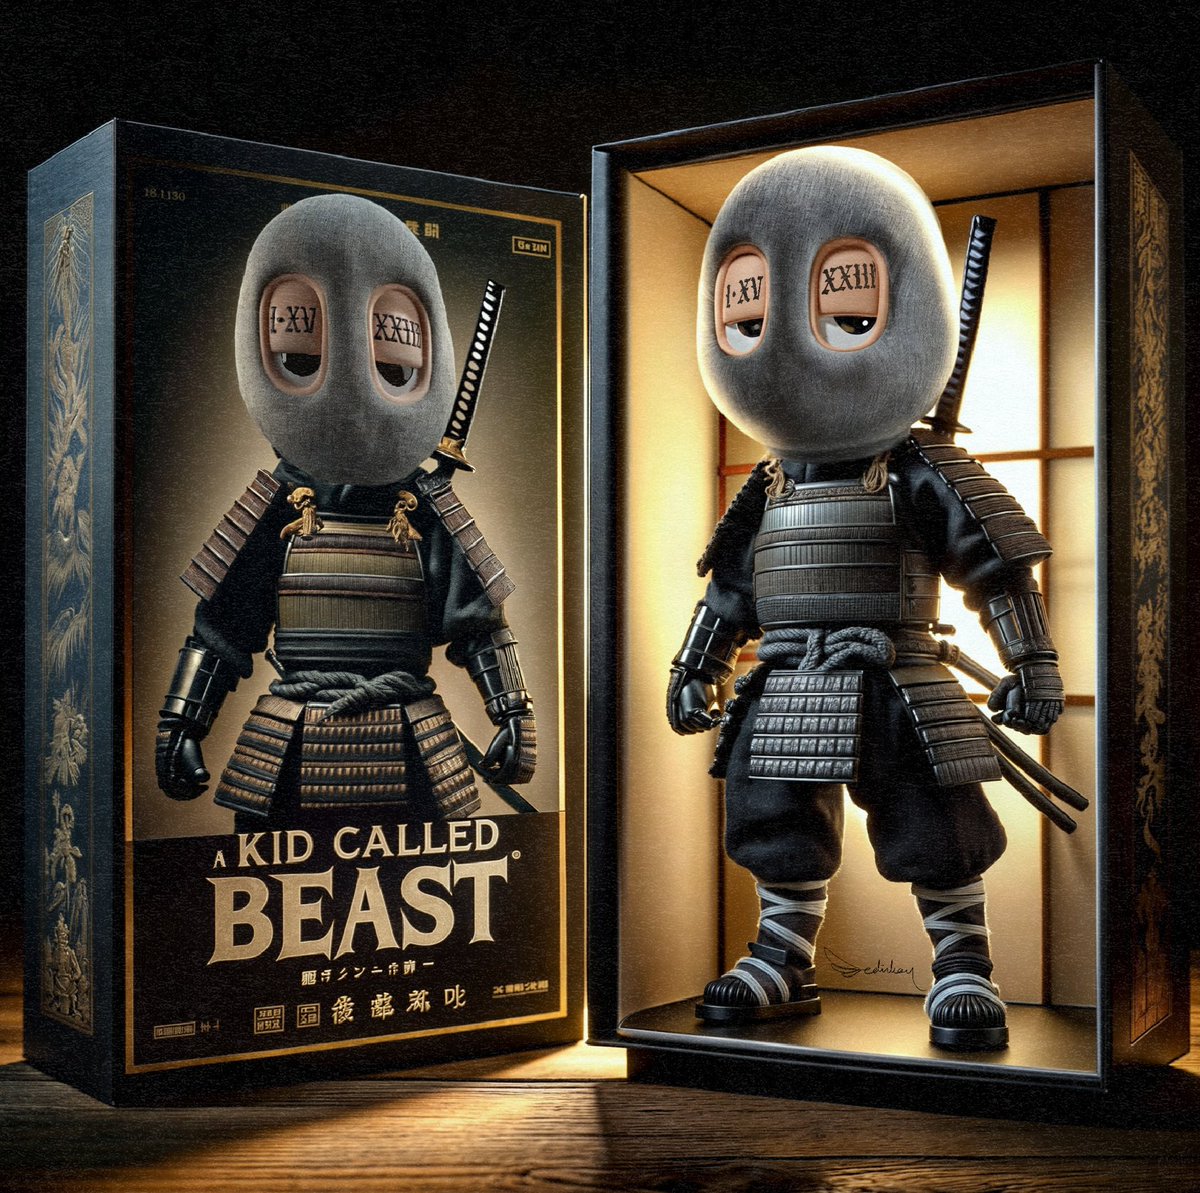 A KID called Beast samurai toy
@akidcalledbeast
#arttoy #vinyltoys #characterdesign